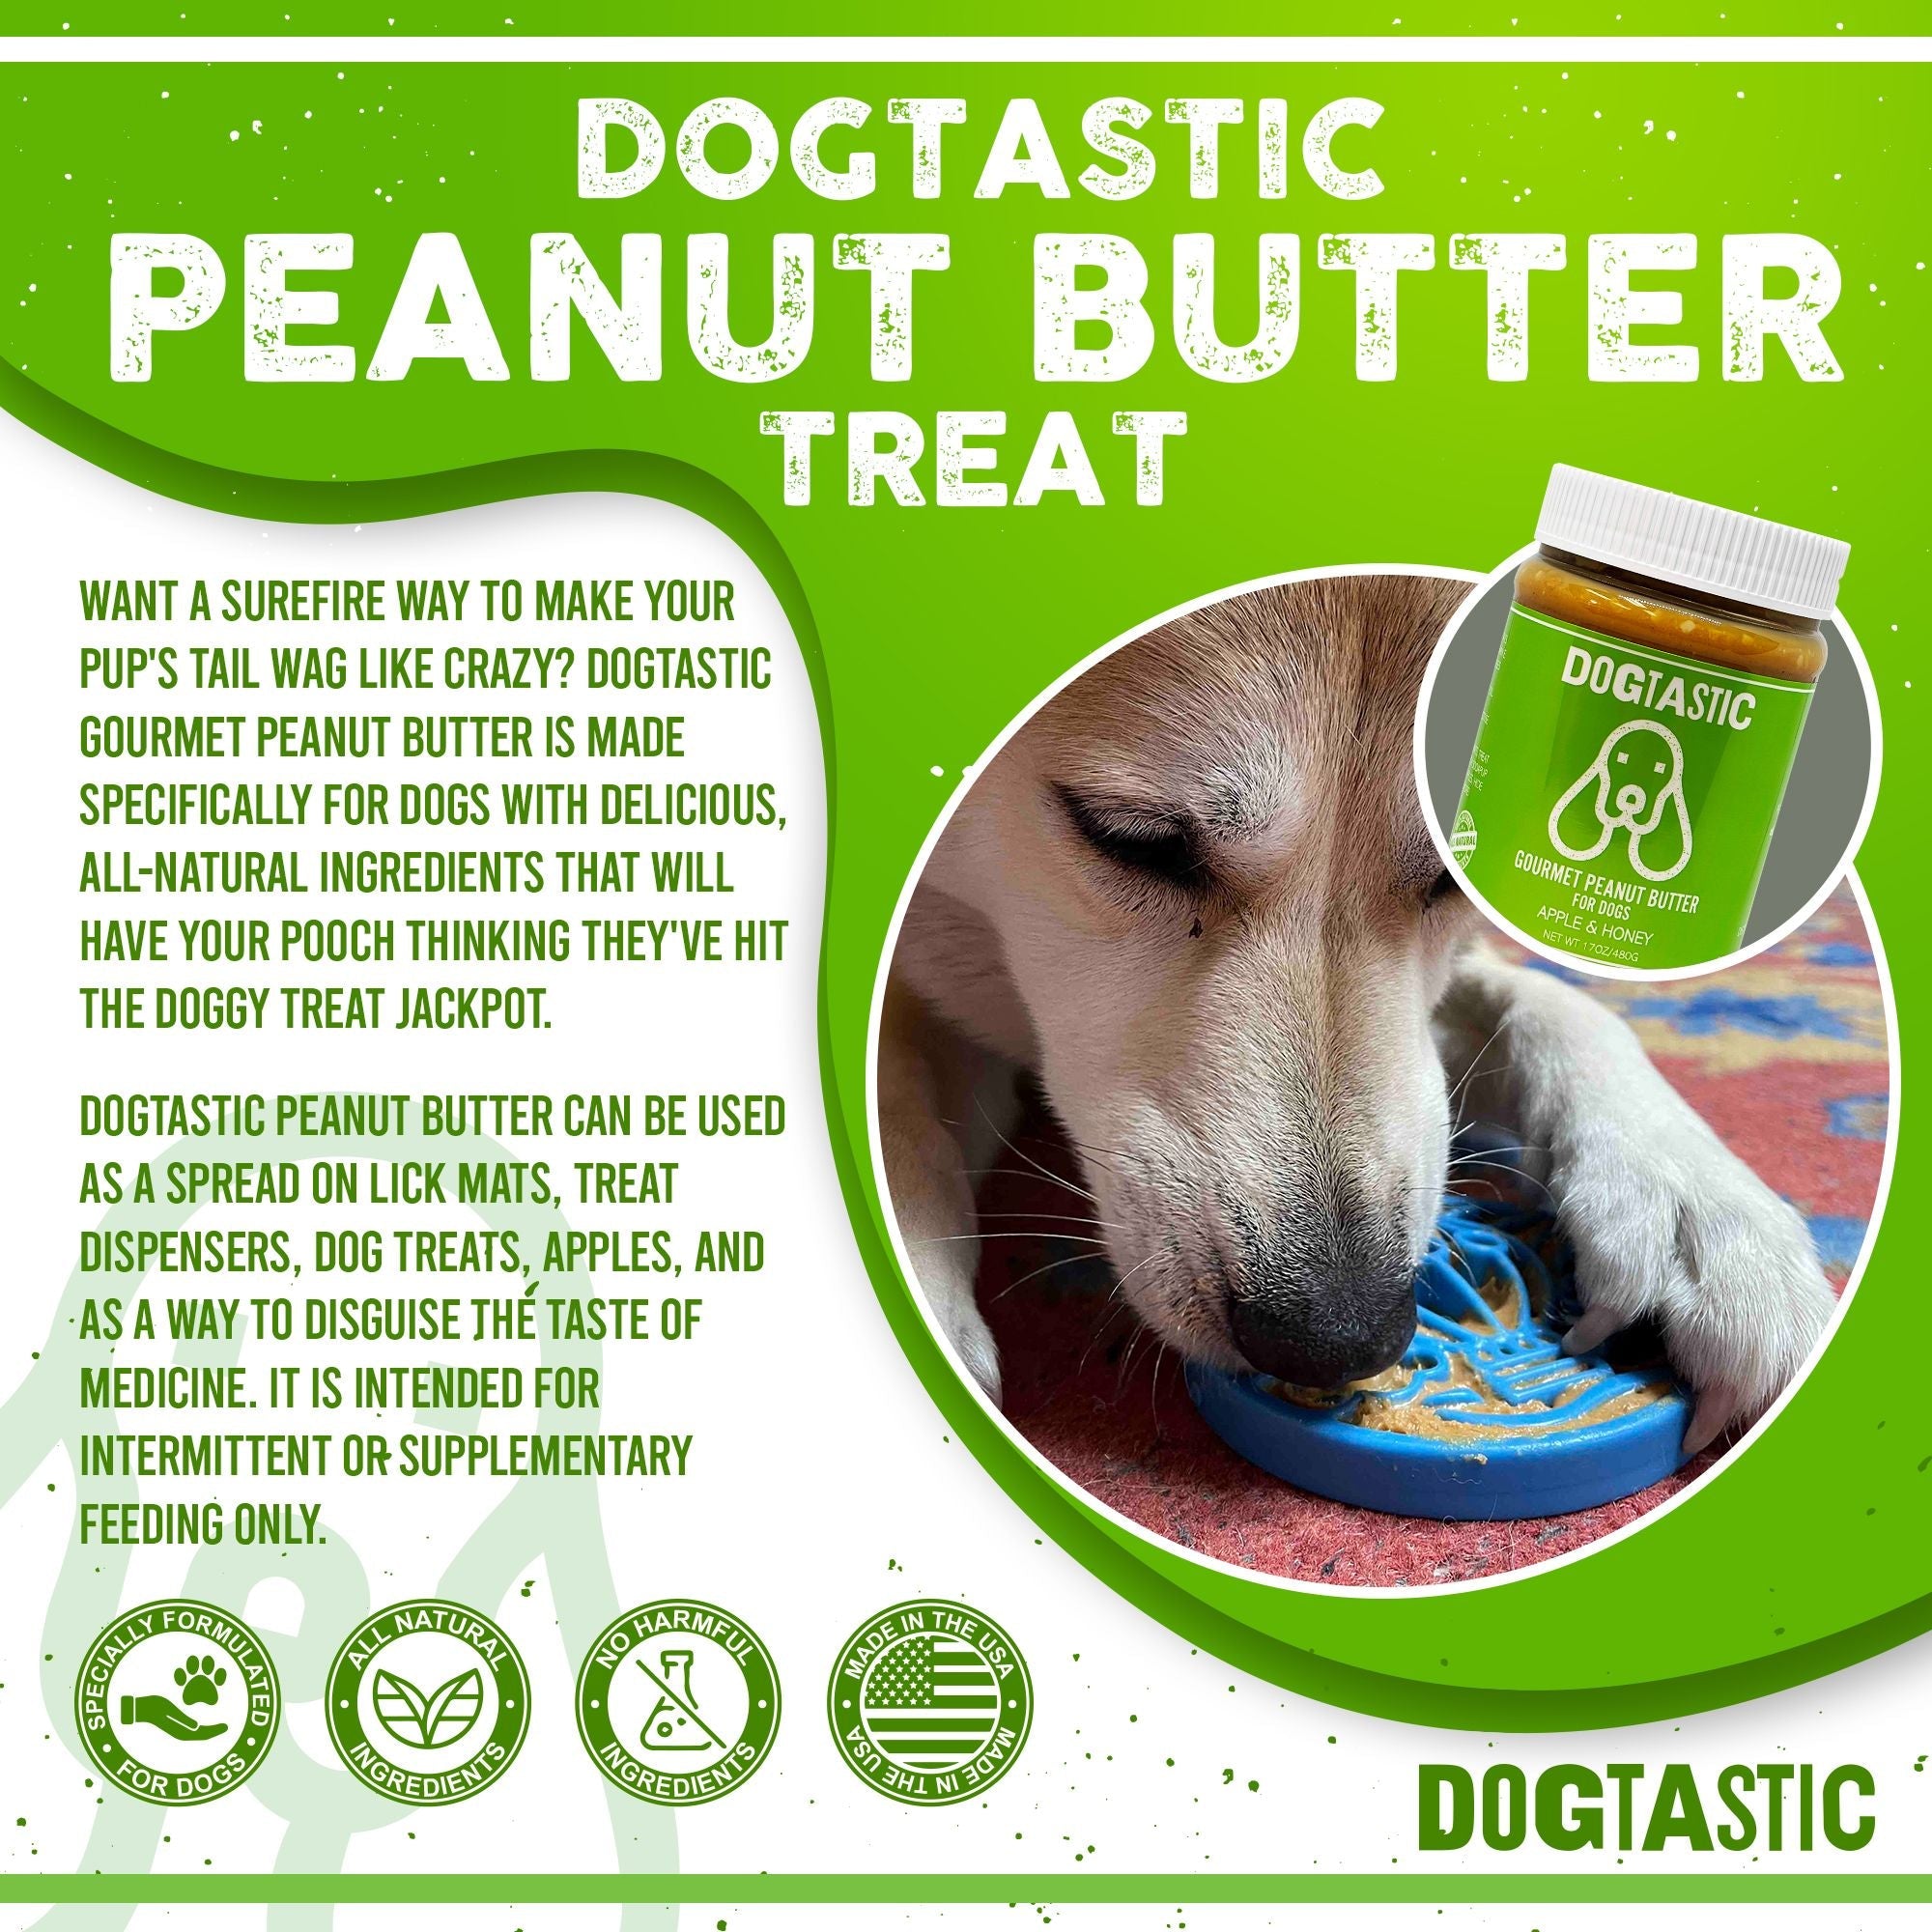 Gourmet Peanut Butter for Dogs - Apple & Honey Flavor